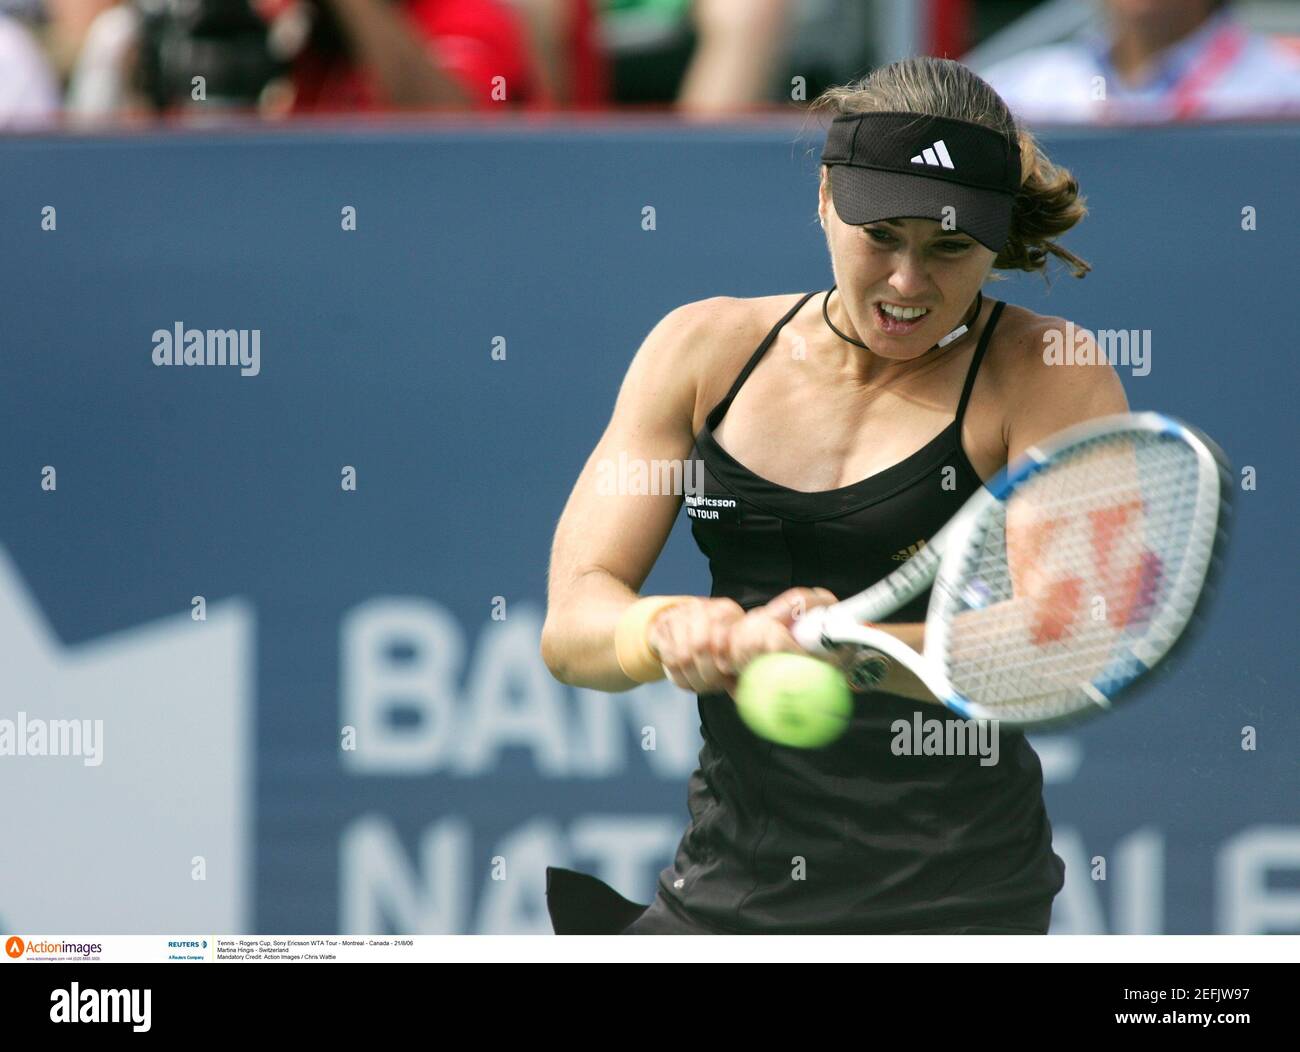 Tennis - Rogers Cup, Sony Ericsson WTA Tour - Montreal - Kanada - 21/8/06 Martina Hingis - Schweiz Kreditaufnahme: Action Images / Chris Wattie Stockfoto